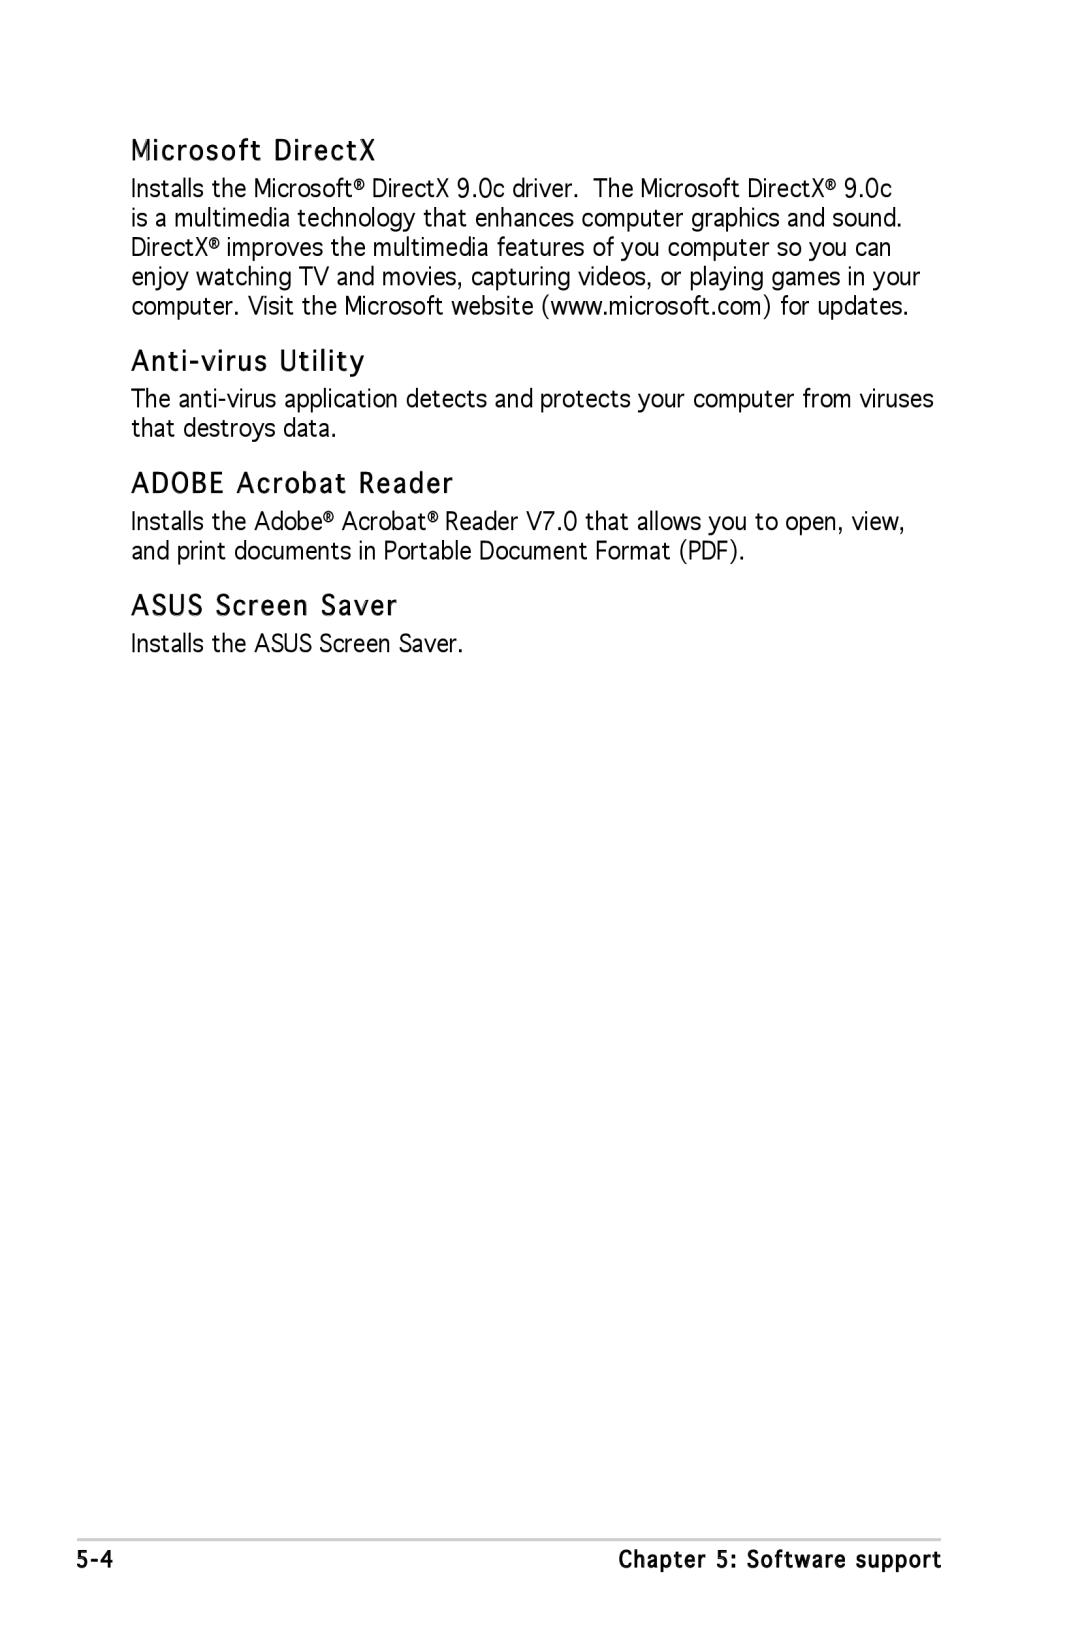 Asus A8N-SLI SE manual Microsoft DirectX, Anti -virus Utility, ADOBE Acrobat Reader, ASUS Screen Saver 